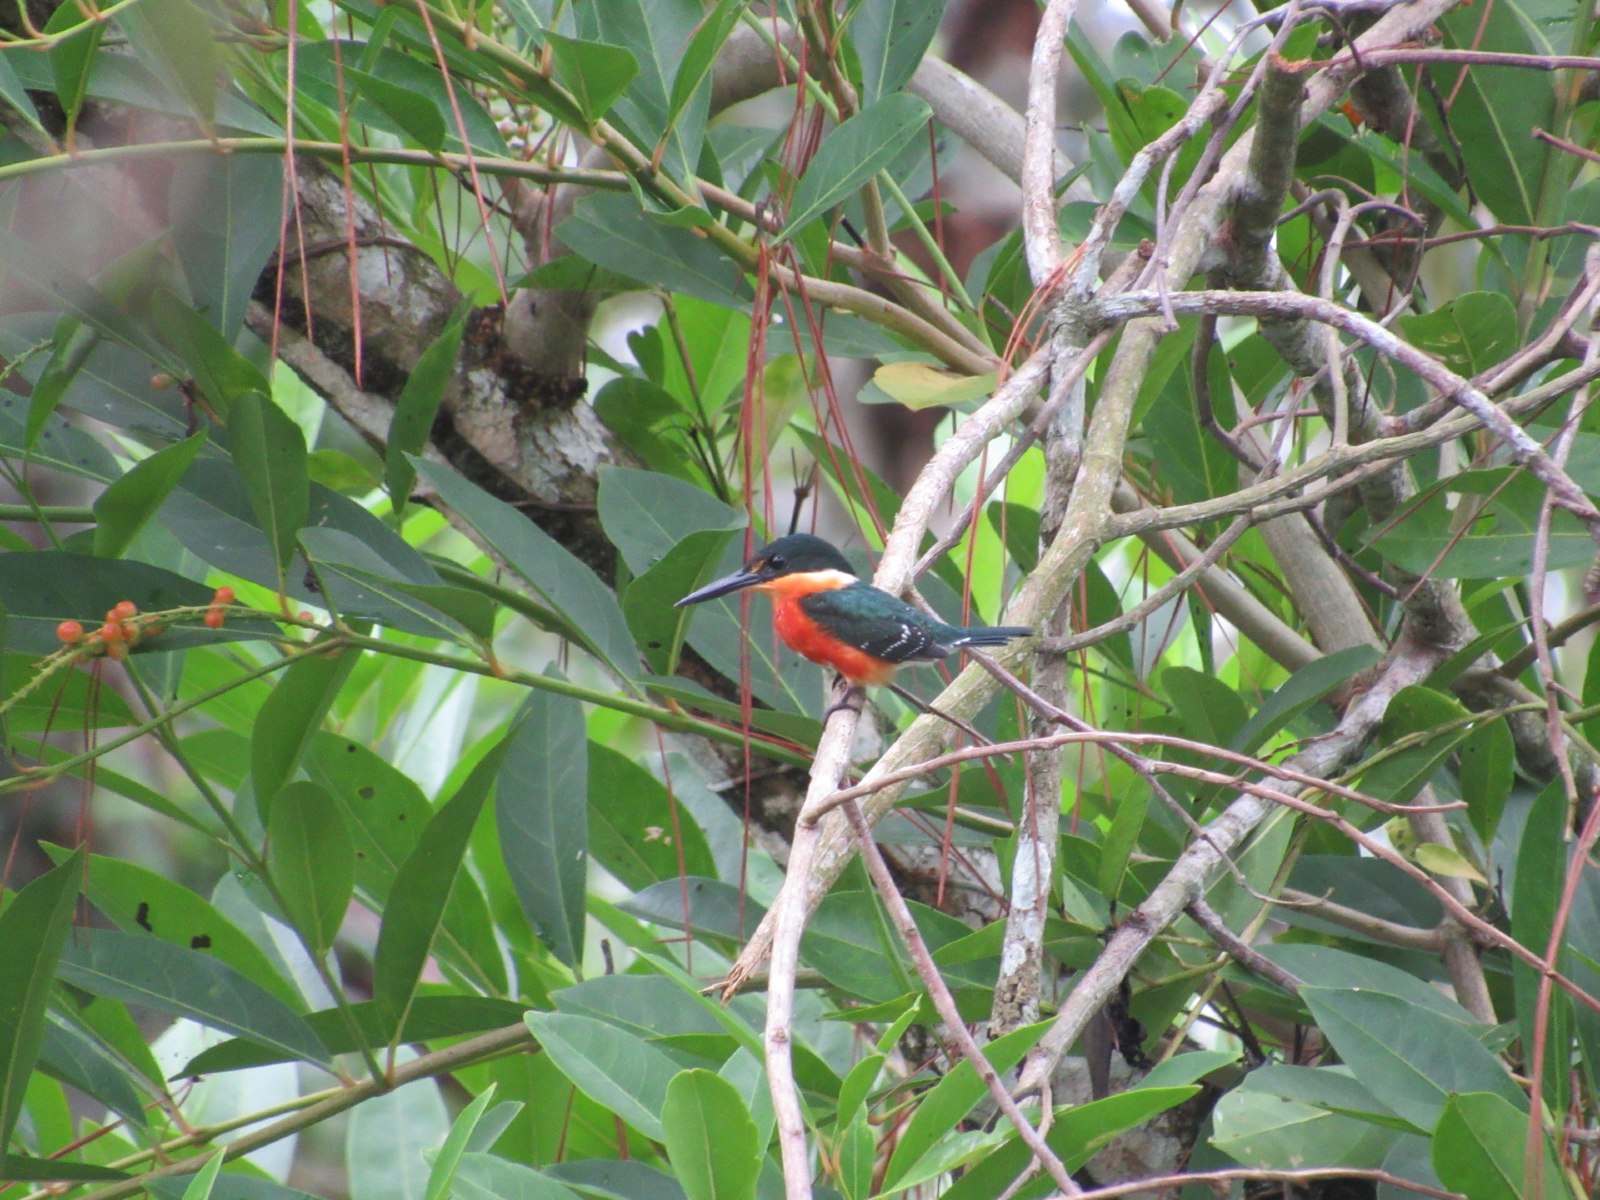 Orange and black bird in the trees.